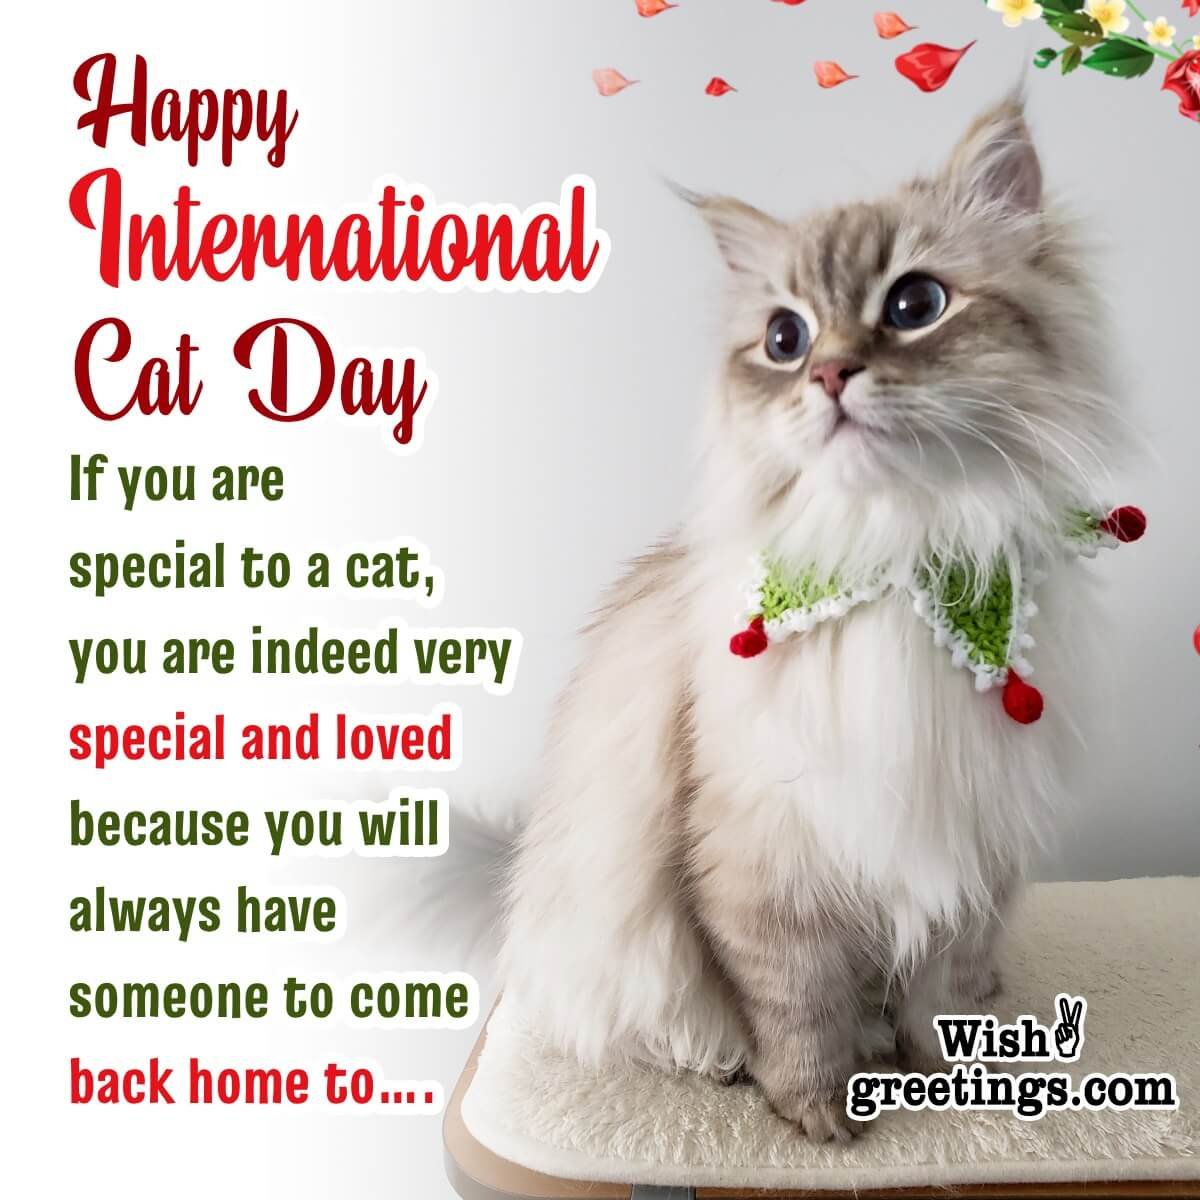 Happy International Cat Day Message Photo